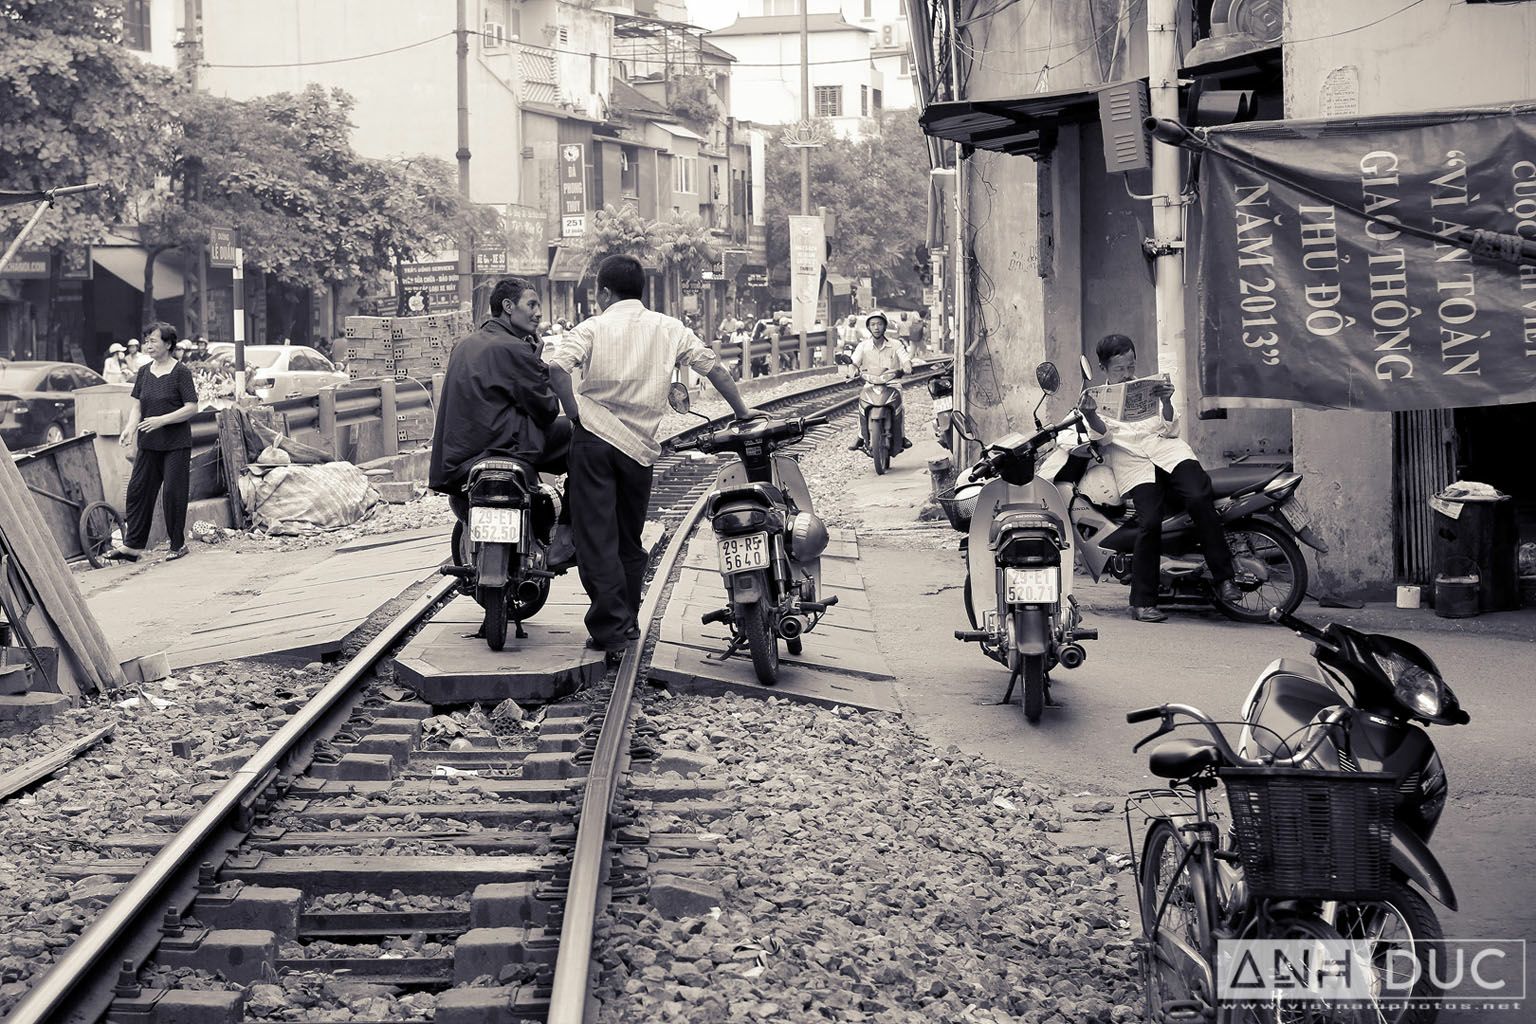 Life beside the railway